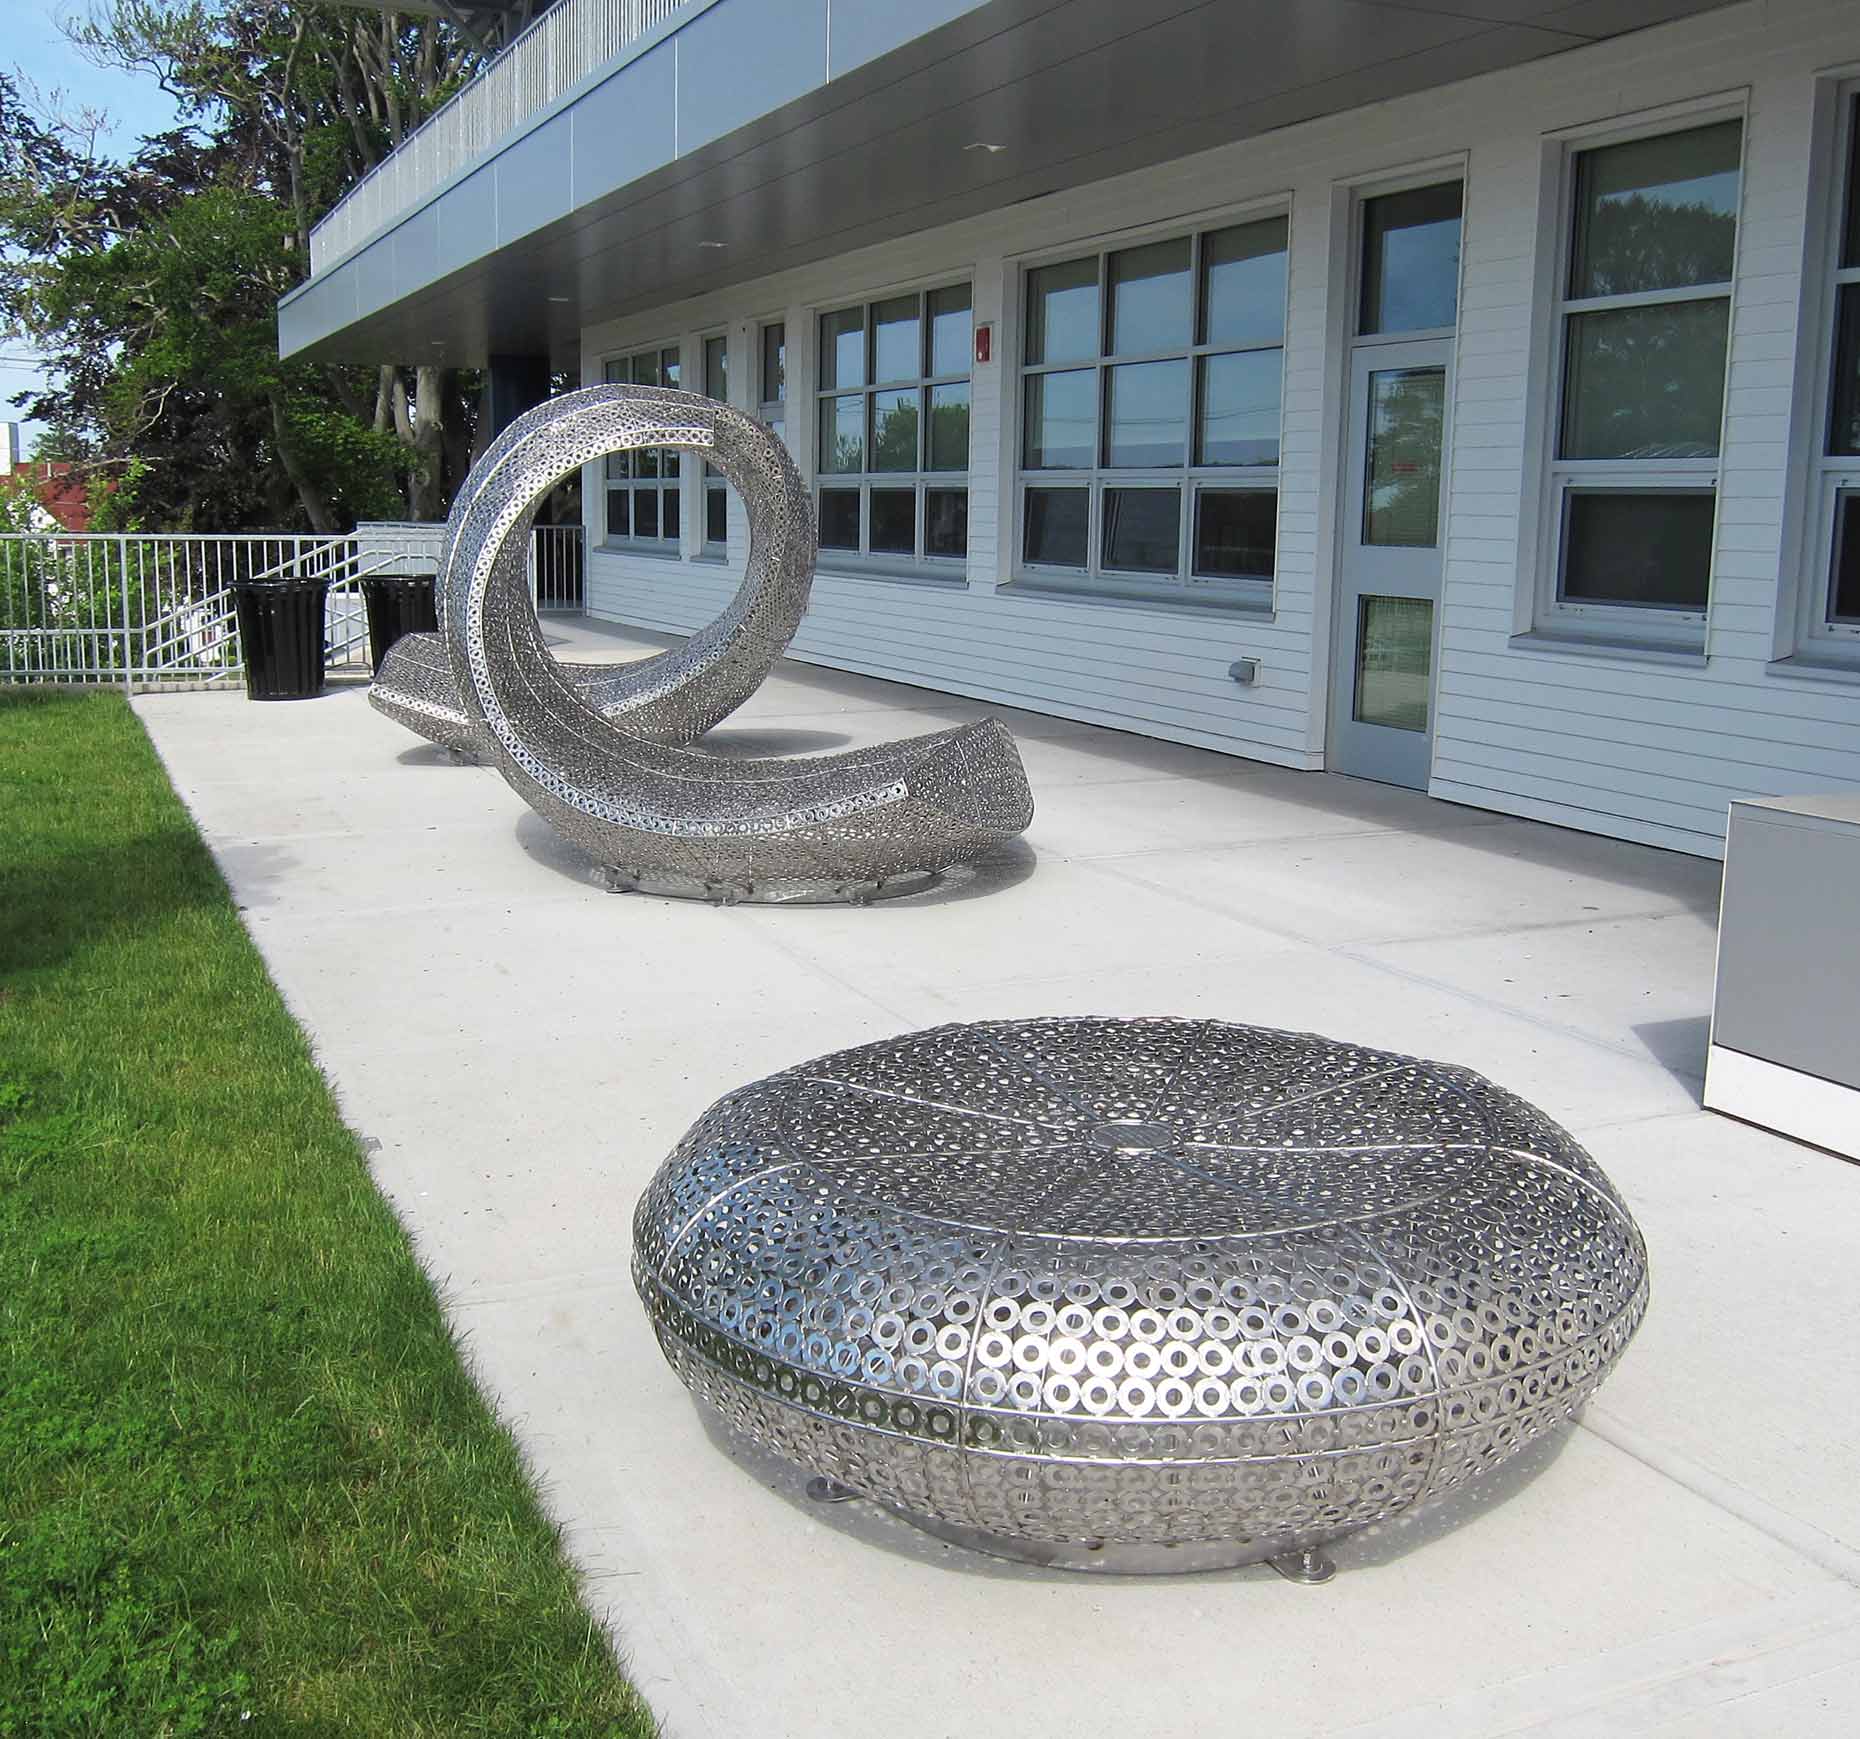 Making-waves_3  sculptural seating and public art installation by Peter Diepenbrock  East Bay Met School  Newport Rhode island